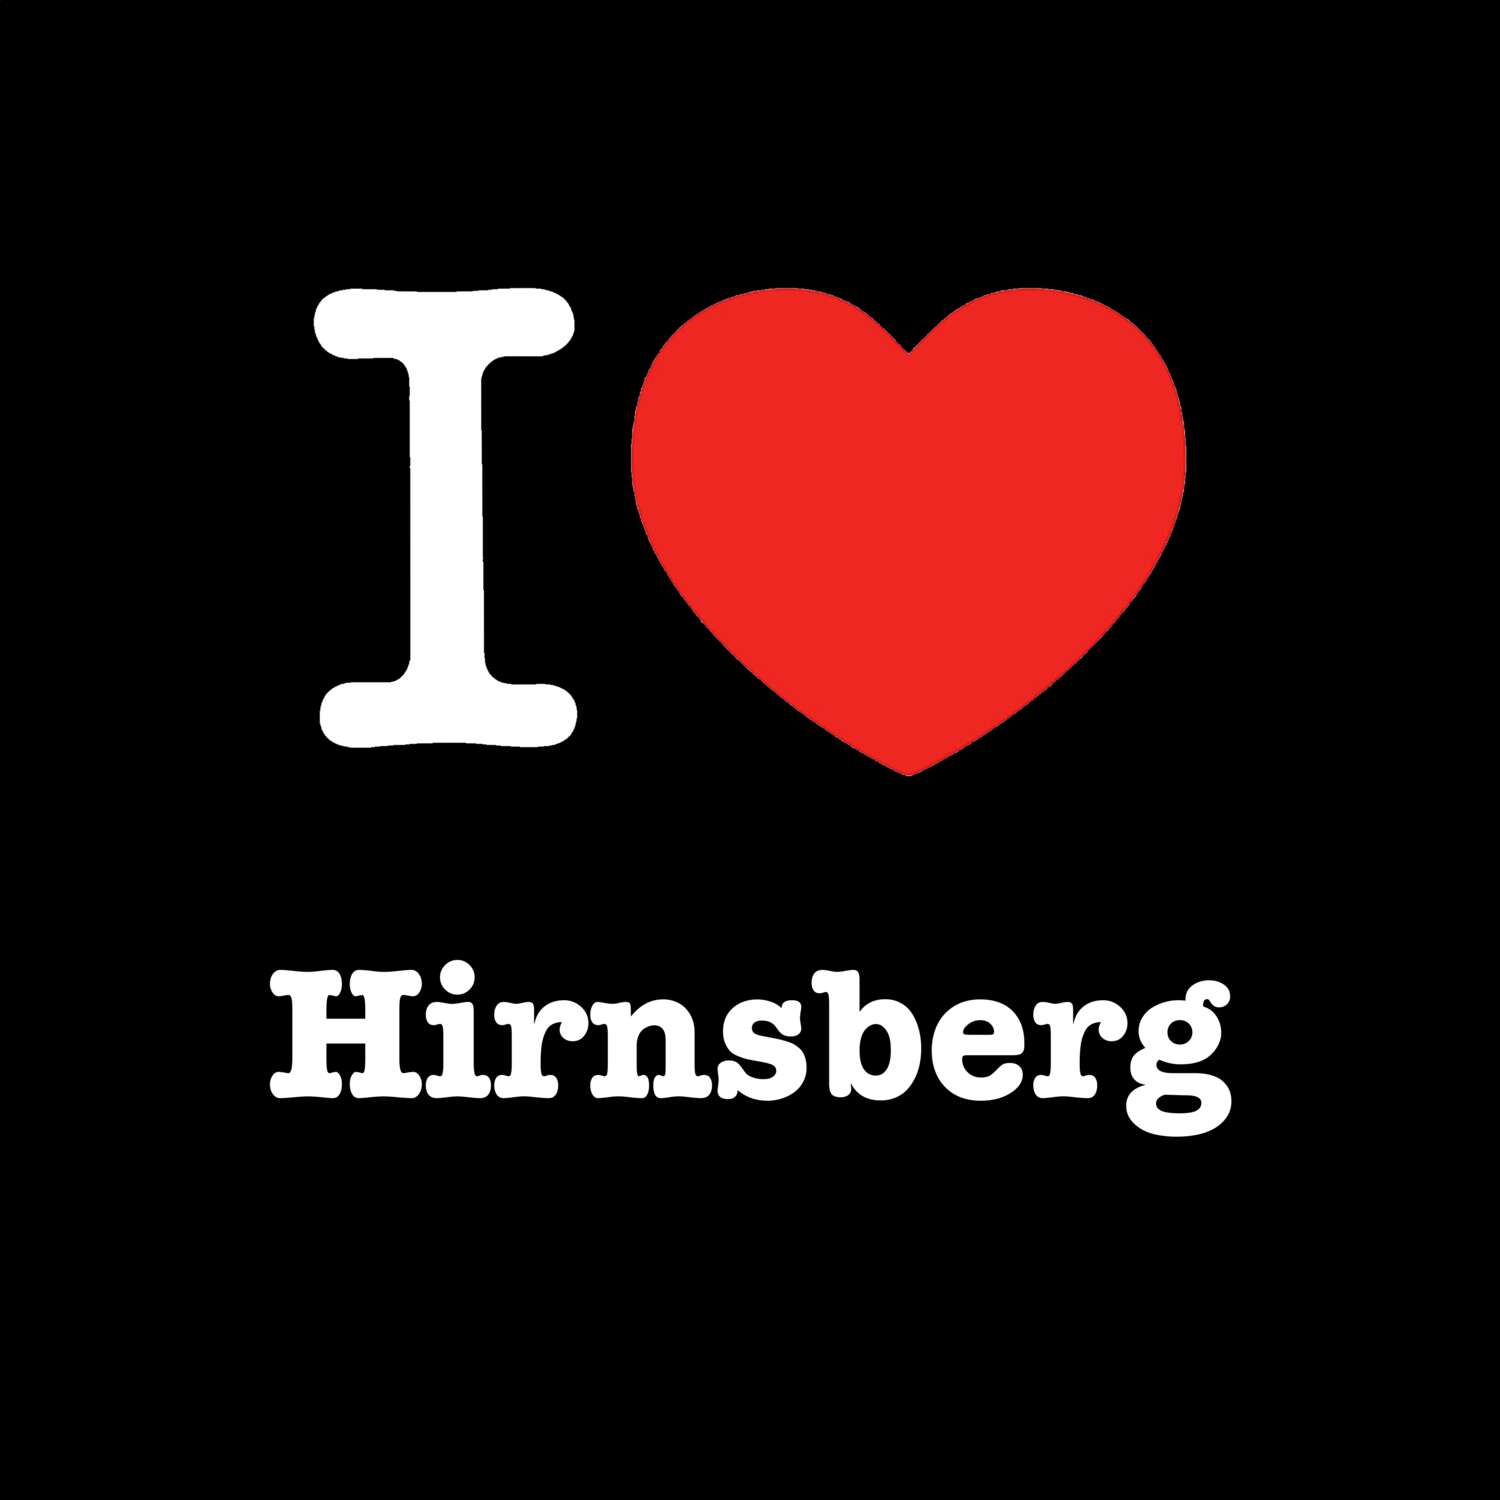 Hirnsberg T-Shirt »I love«